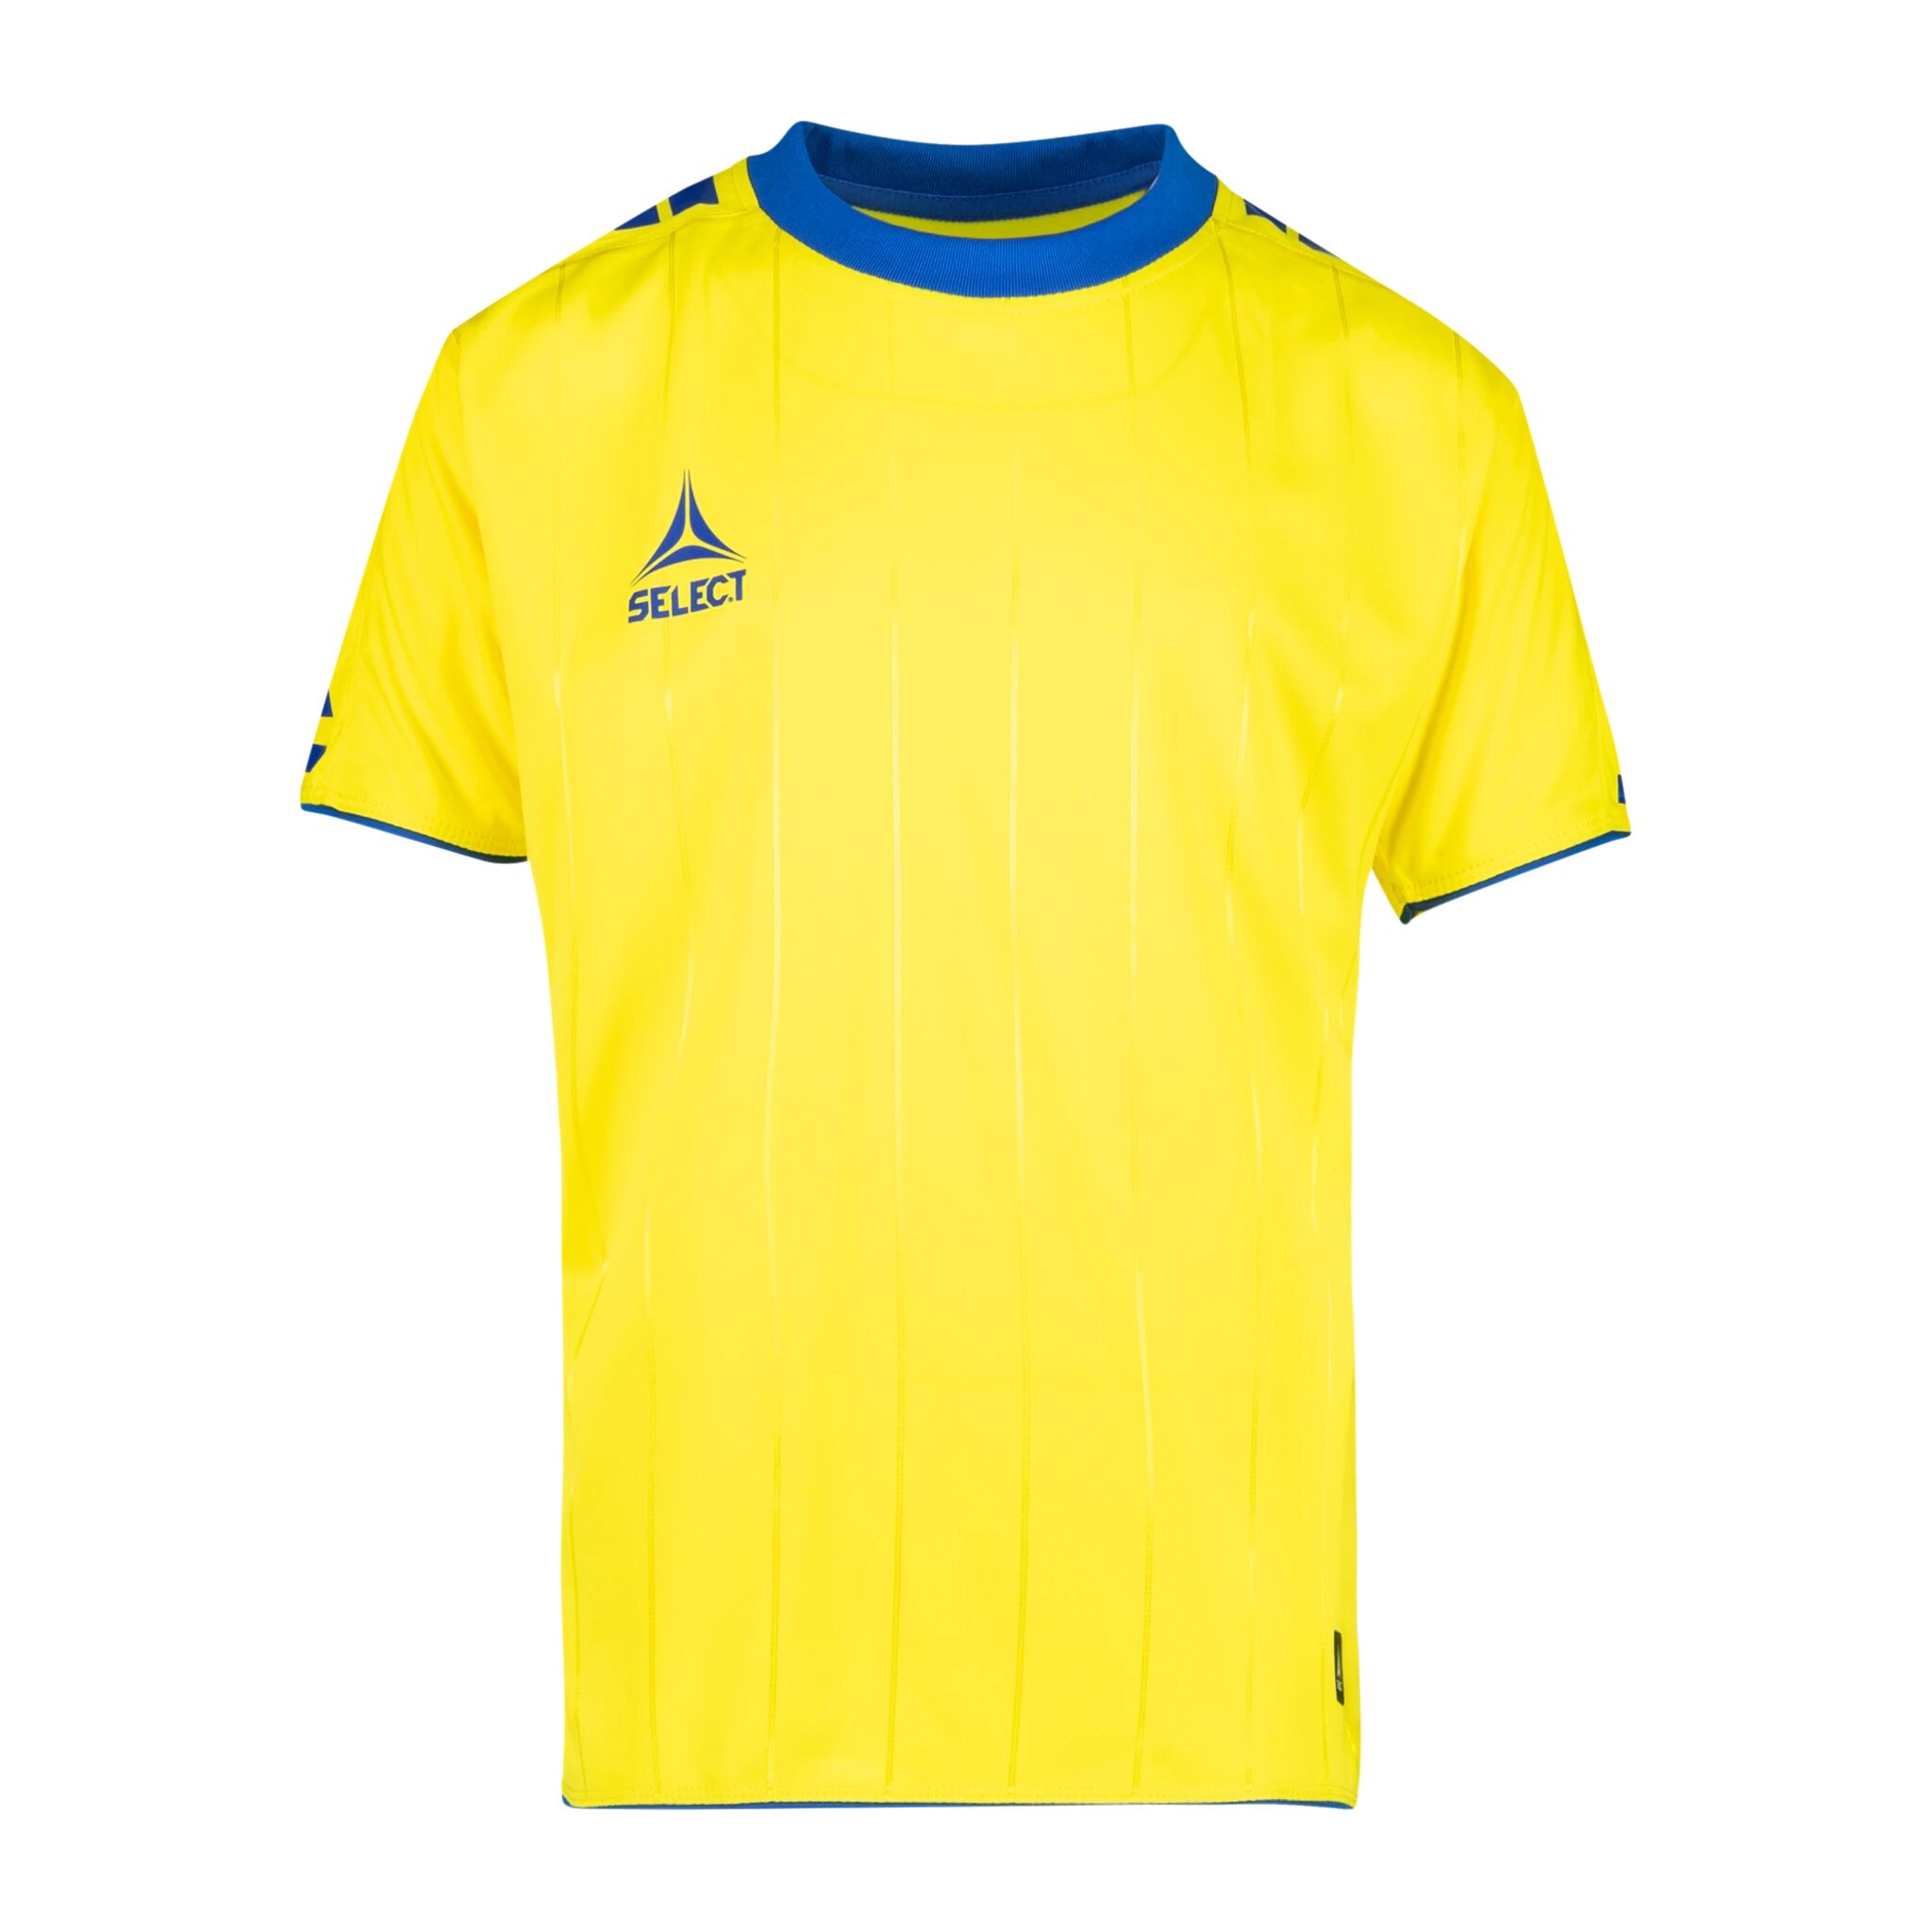 Select Player shirt S/S Argentina, fotballtrøye senior 164 Yellow/Blue